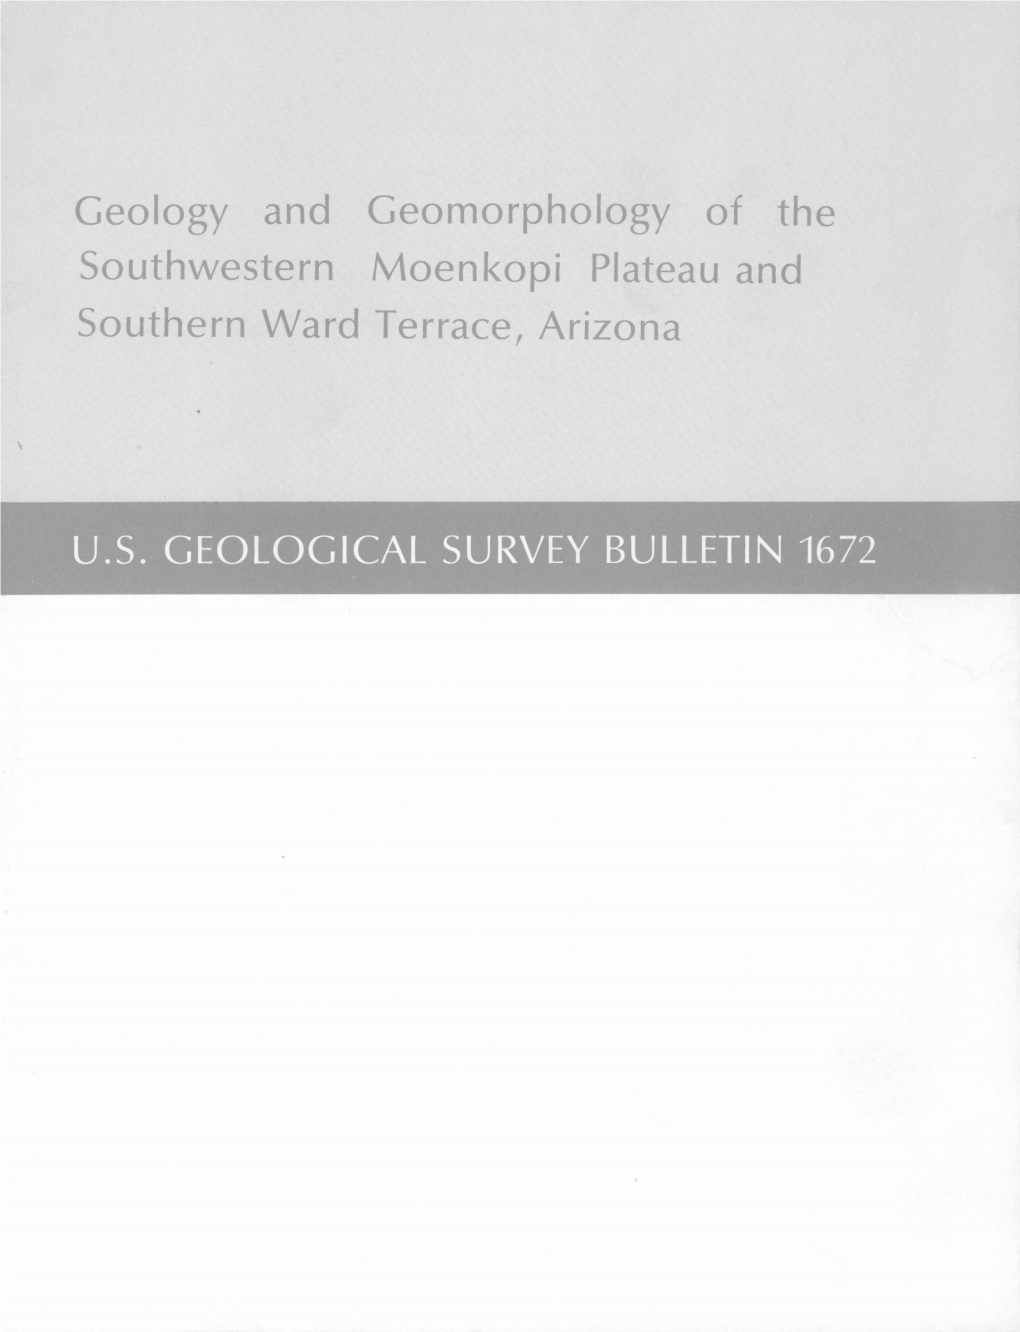 Geology and Geomorphology of the Southwestern Moenkopi Plateau Arid Southern Ward Terrace, Arizona